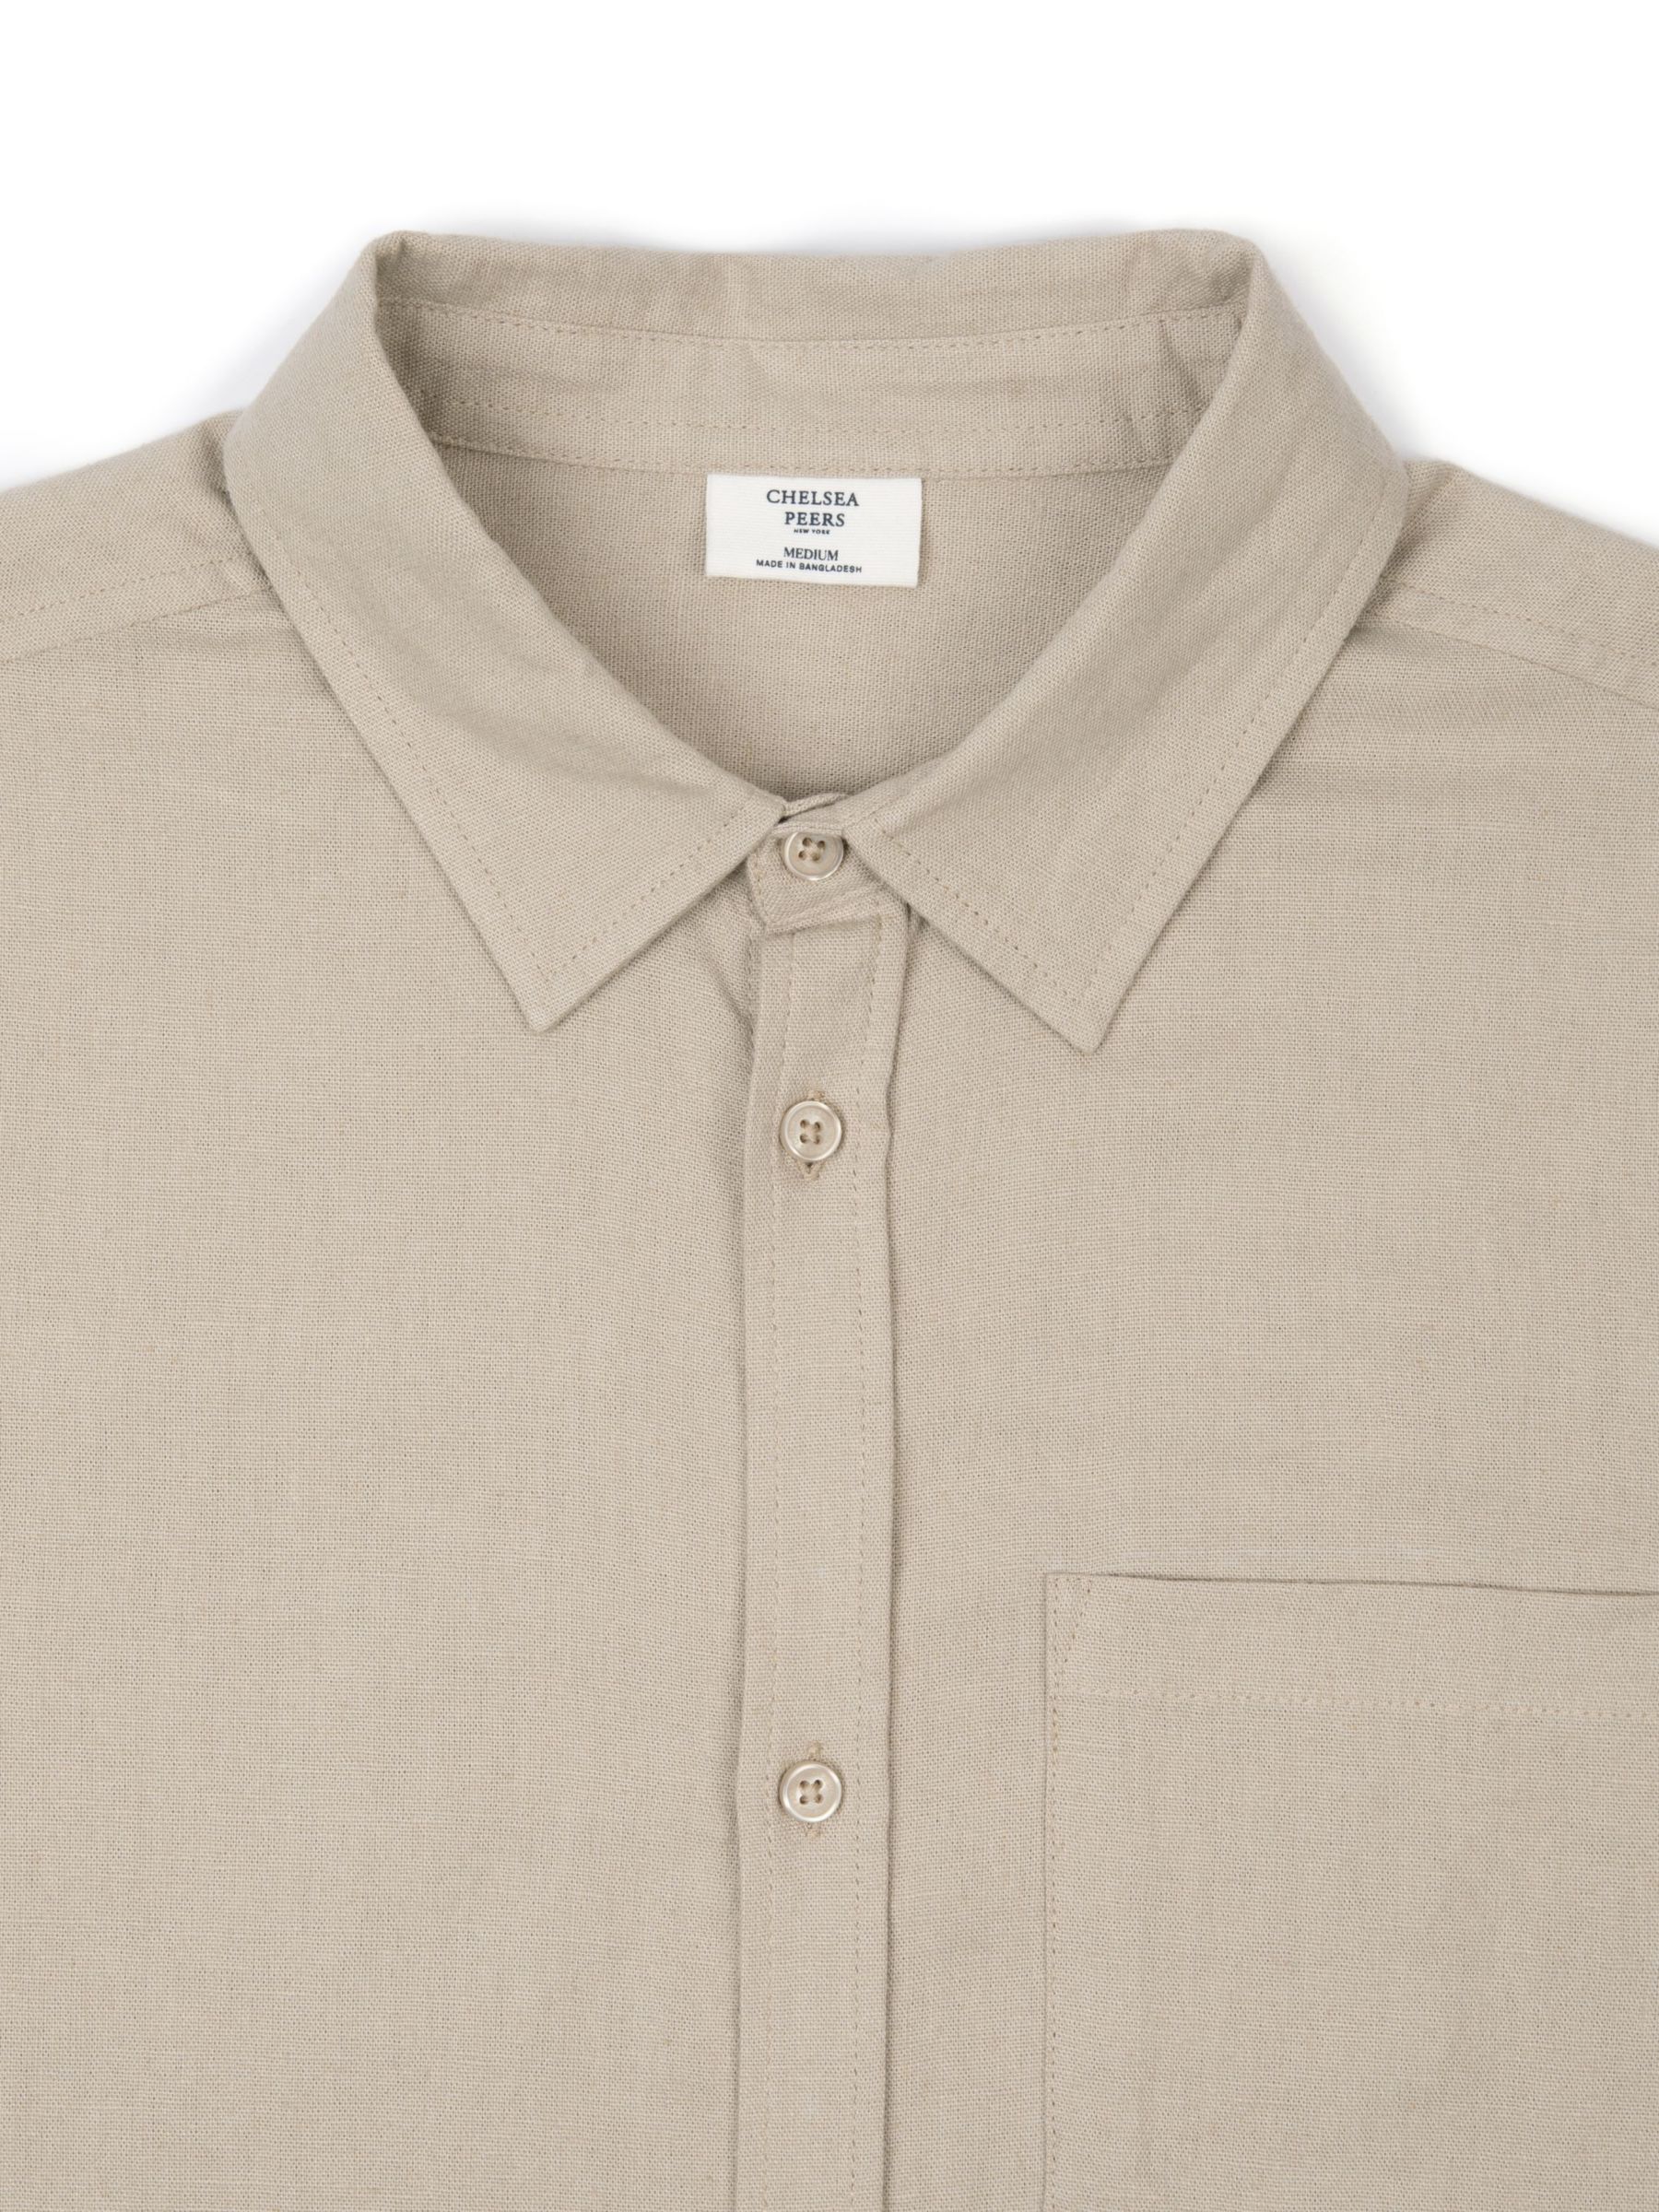 Chelsea Peers Linen Blend Long Sleeve Shirt, Camel, L